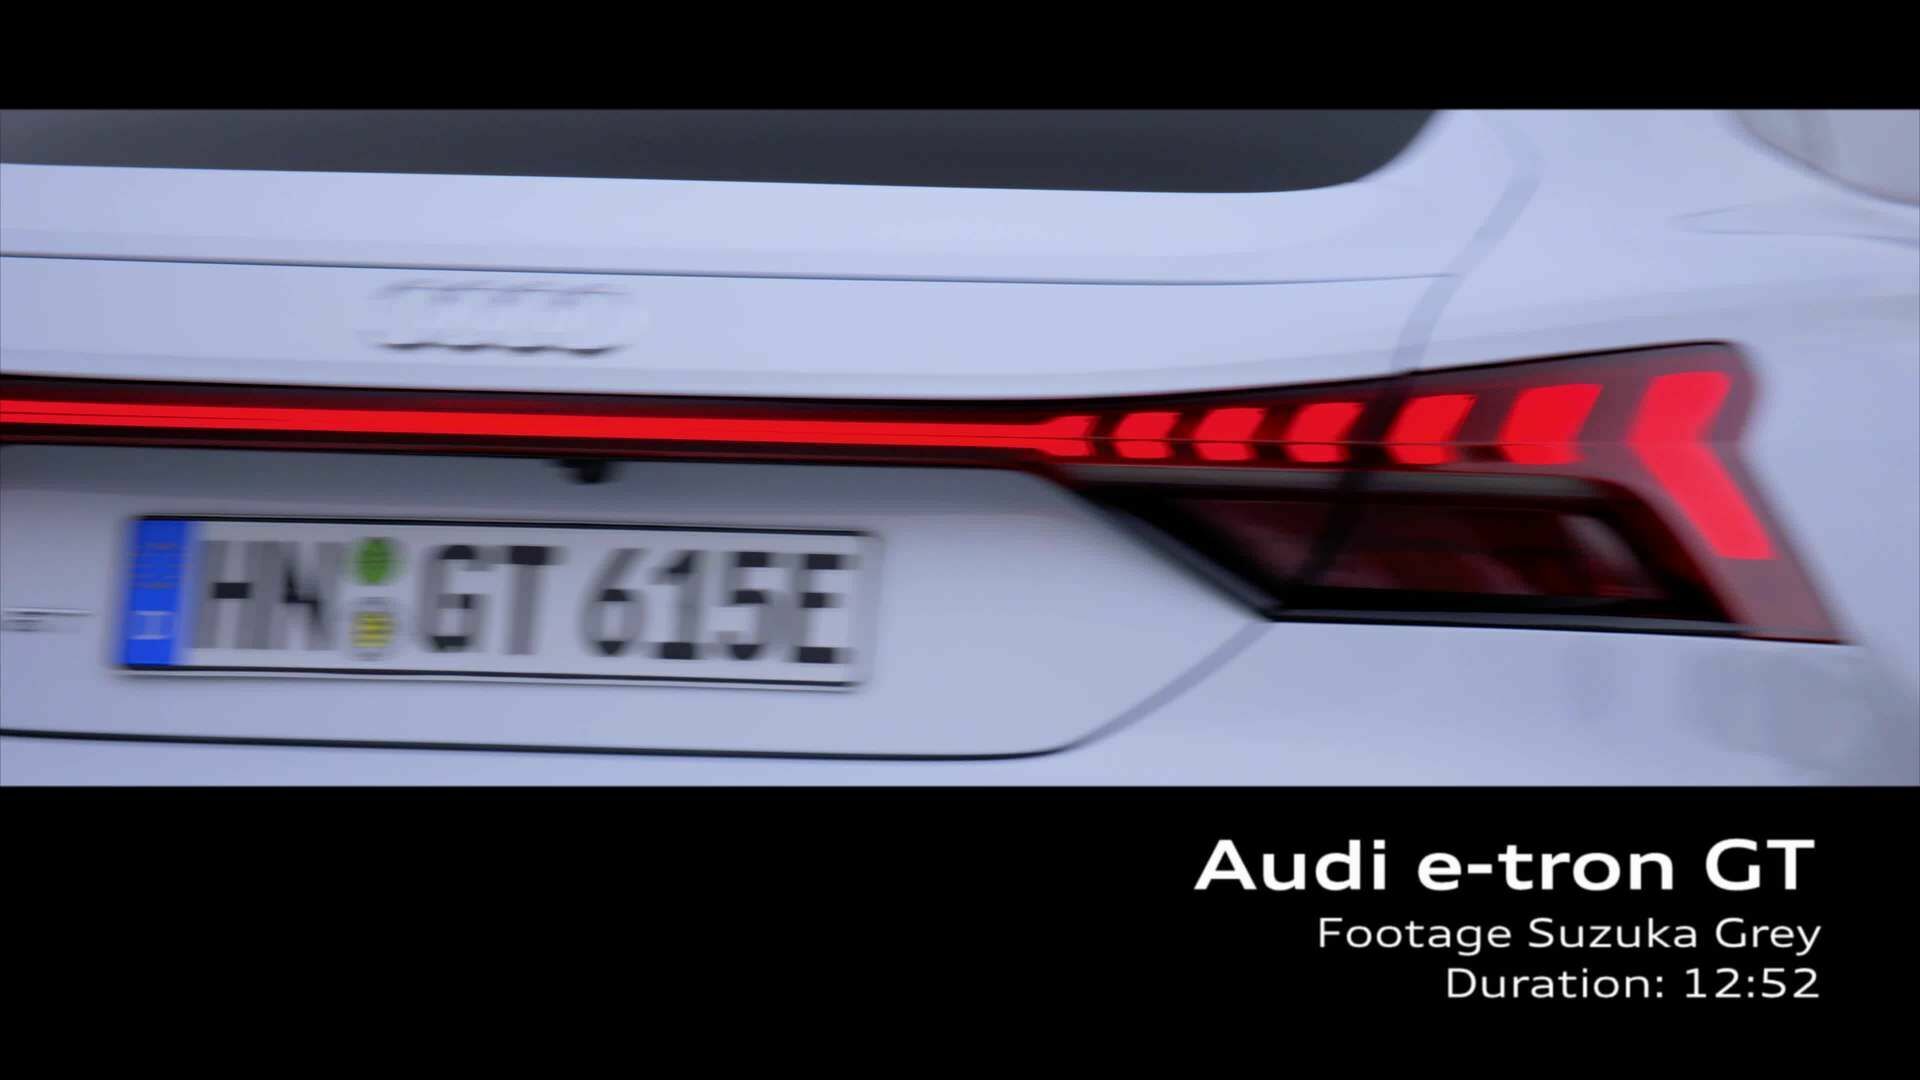 Footage: Audi e-tron GT Suzuka Grey